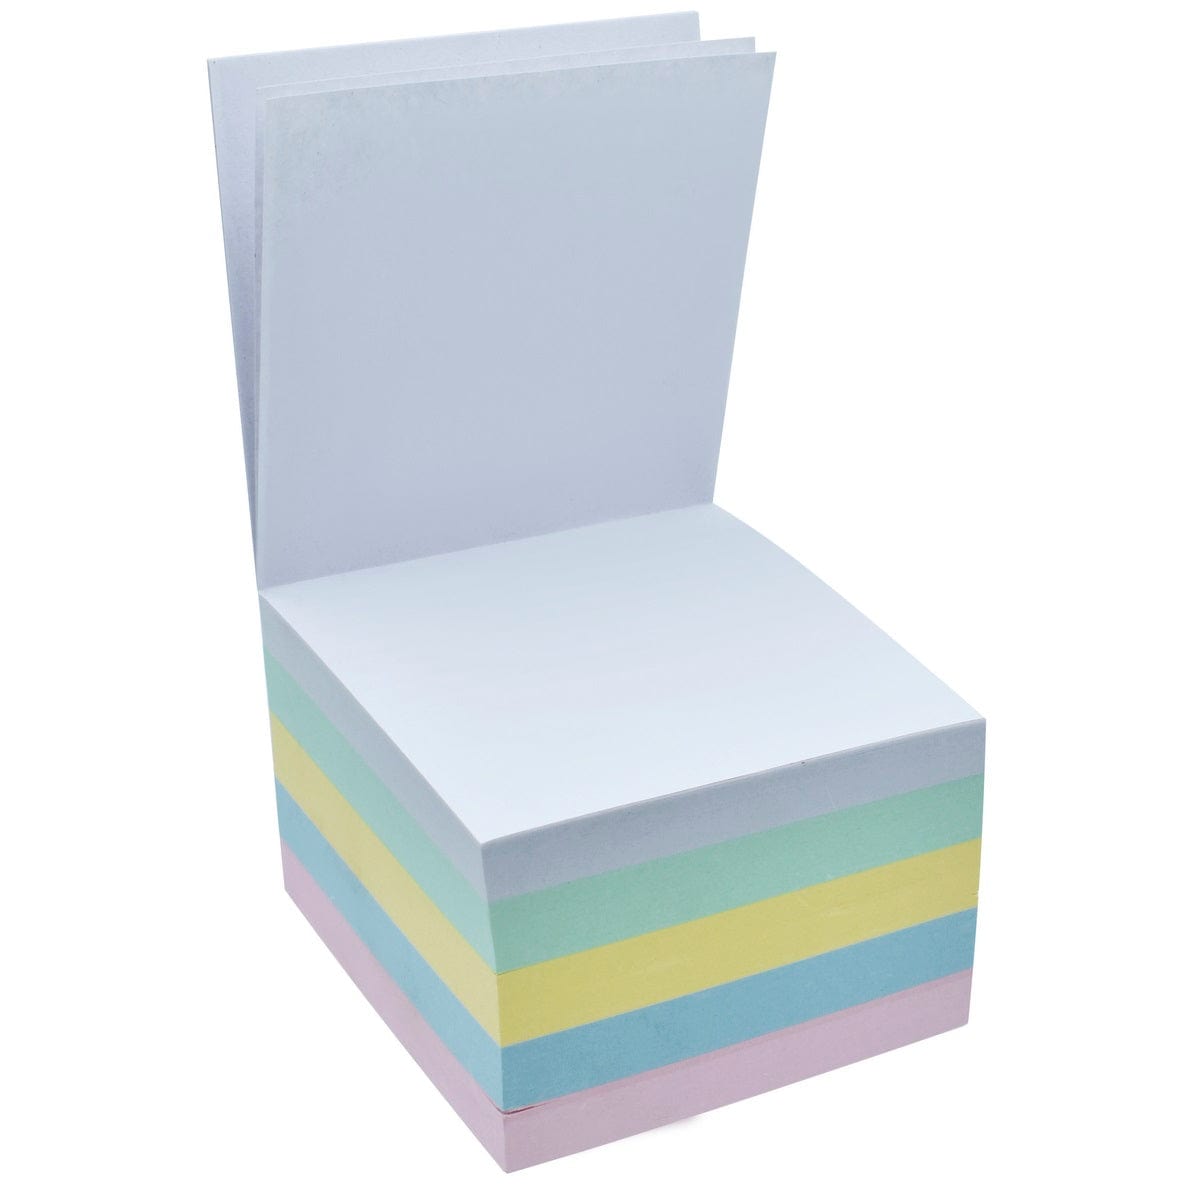 jags-mumbai Paper Pastel Color Paper Cube Pad 250 Sheets 3x3 Inch